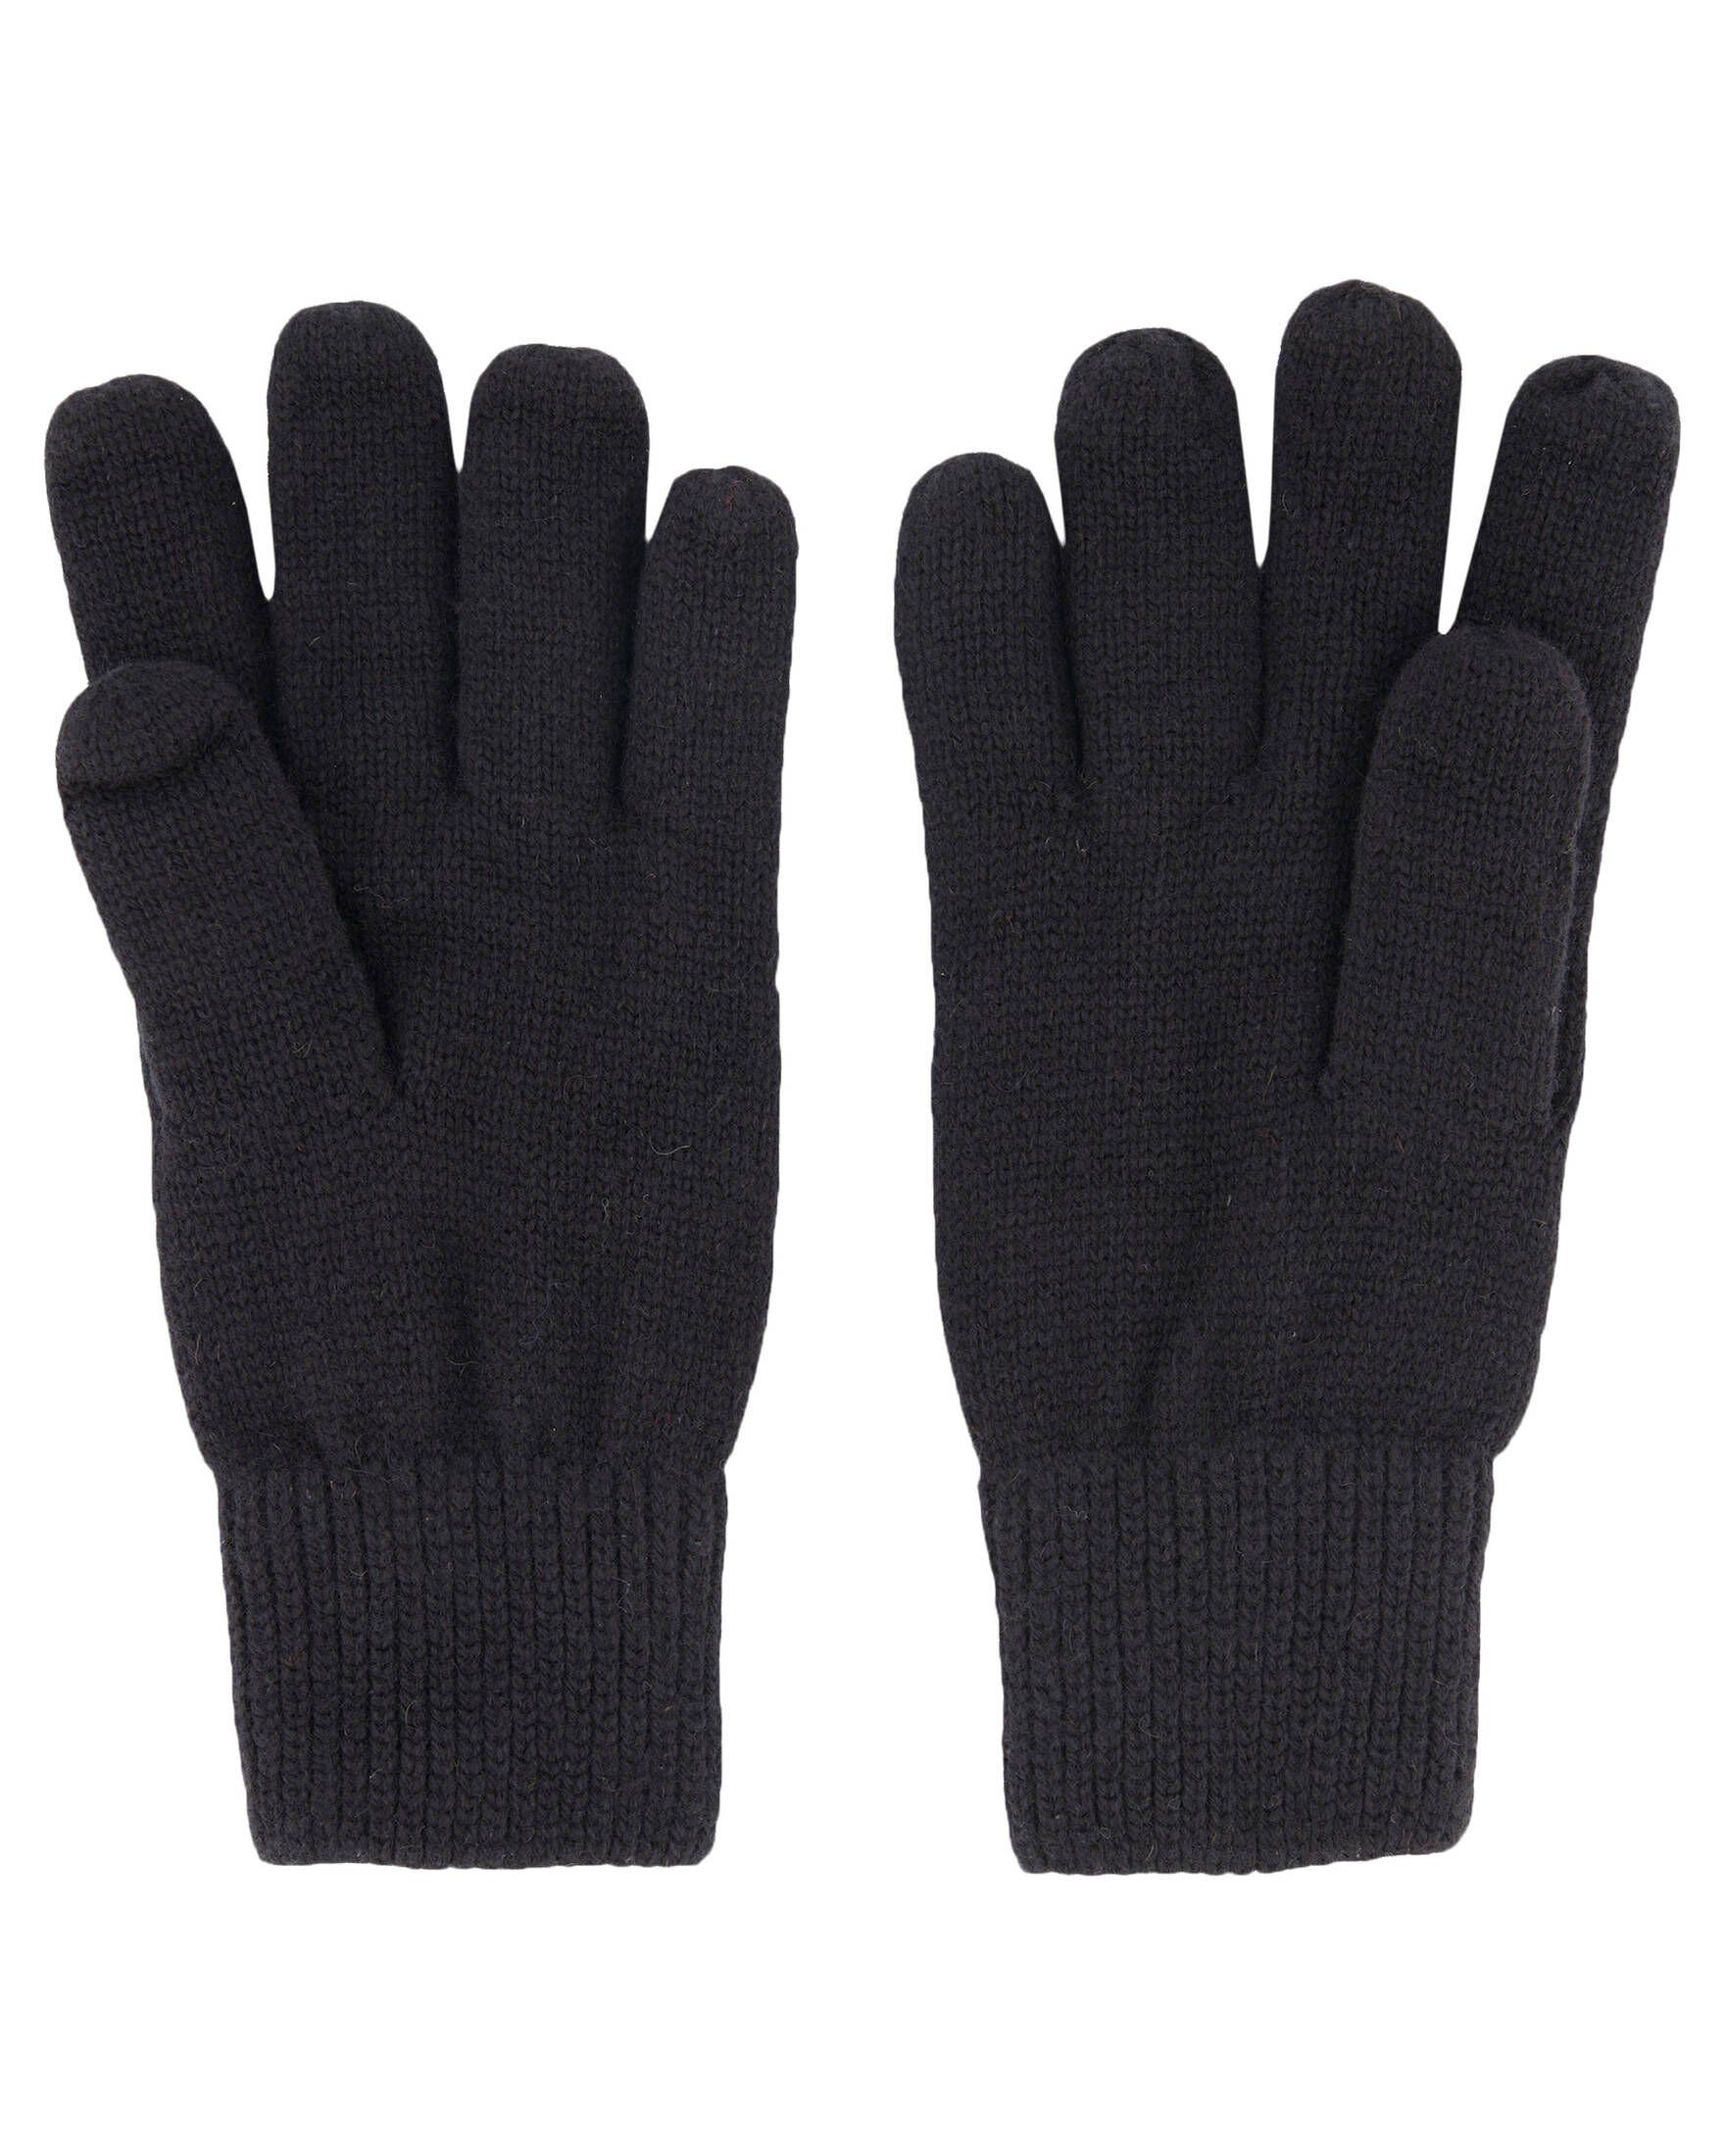 Barts Skihandschuhe Herren Handschuhe / Haakon schwarz (200) Fingerhandschuhe Gloves